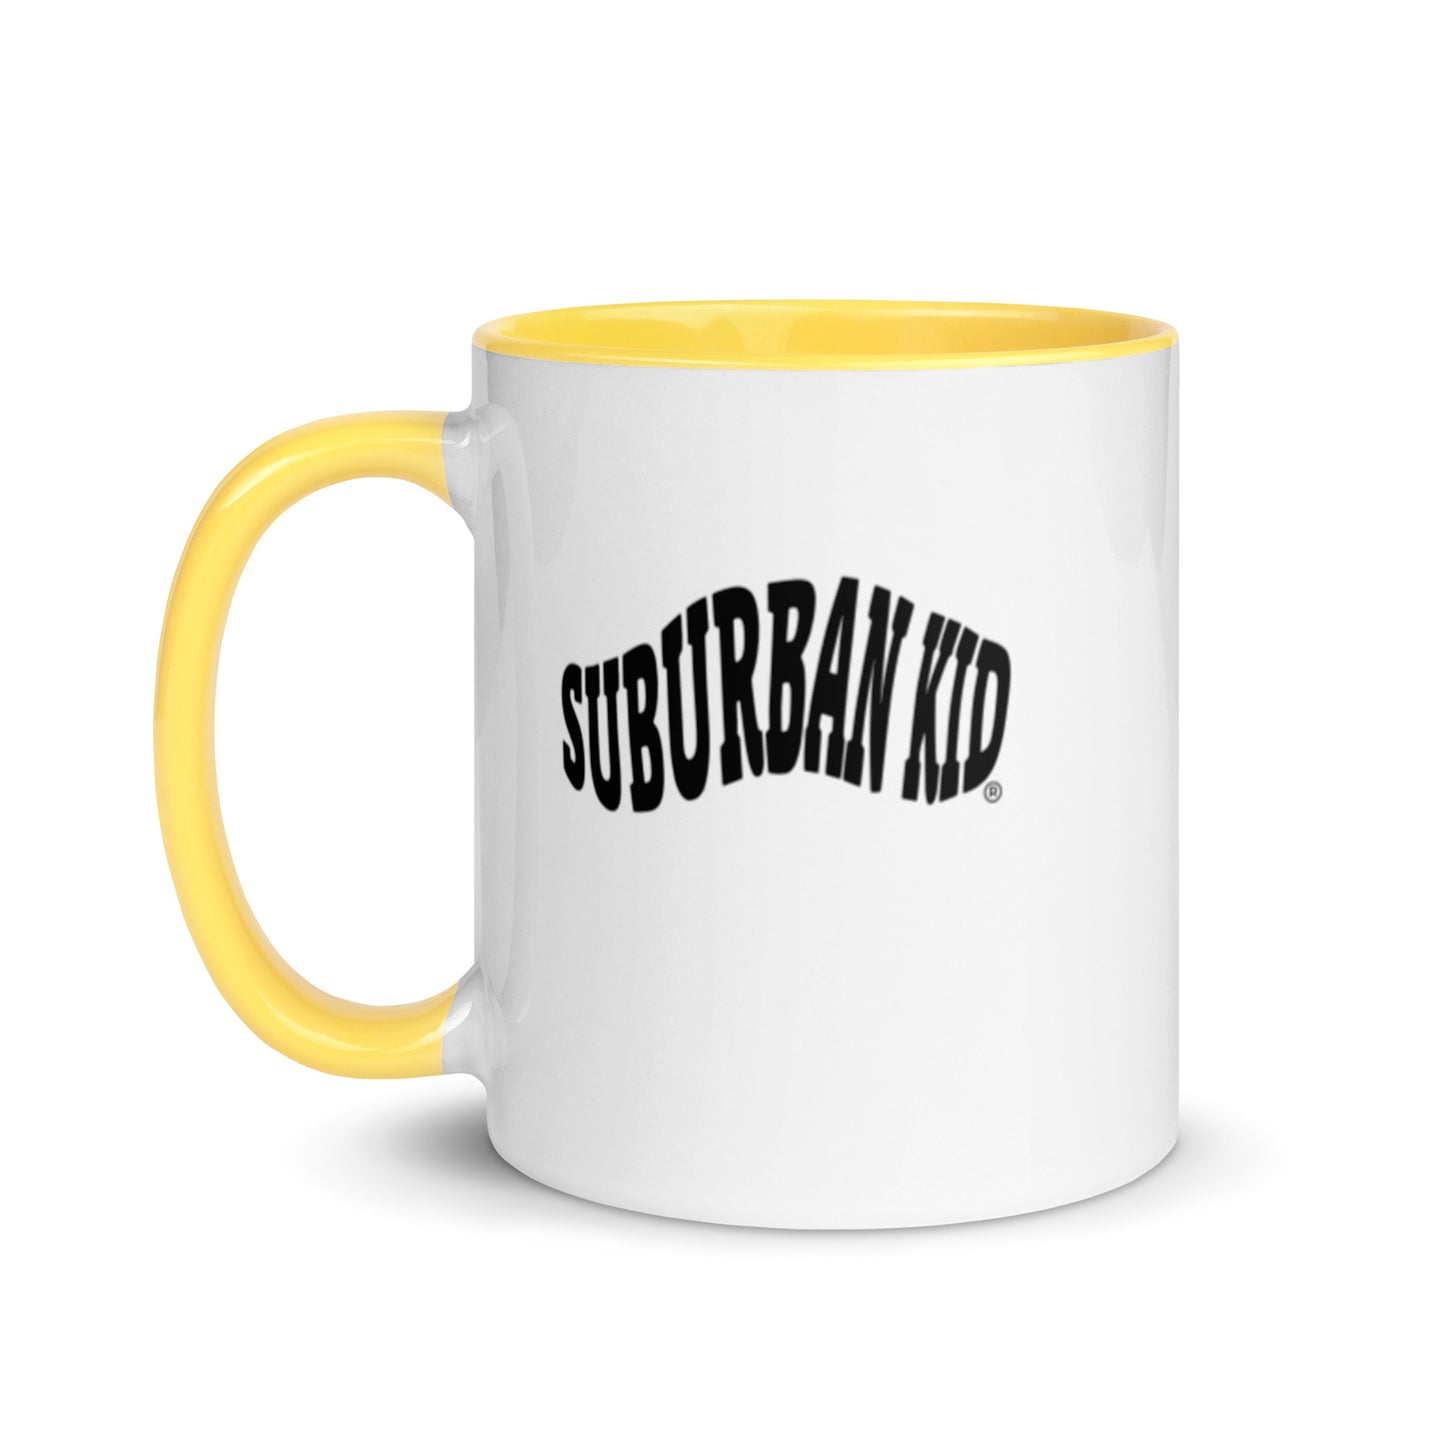 Suburban Kid Color Inside Mug